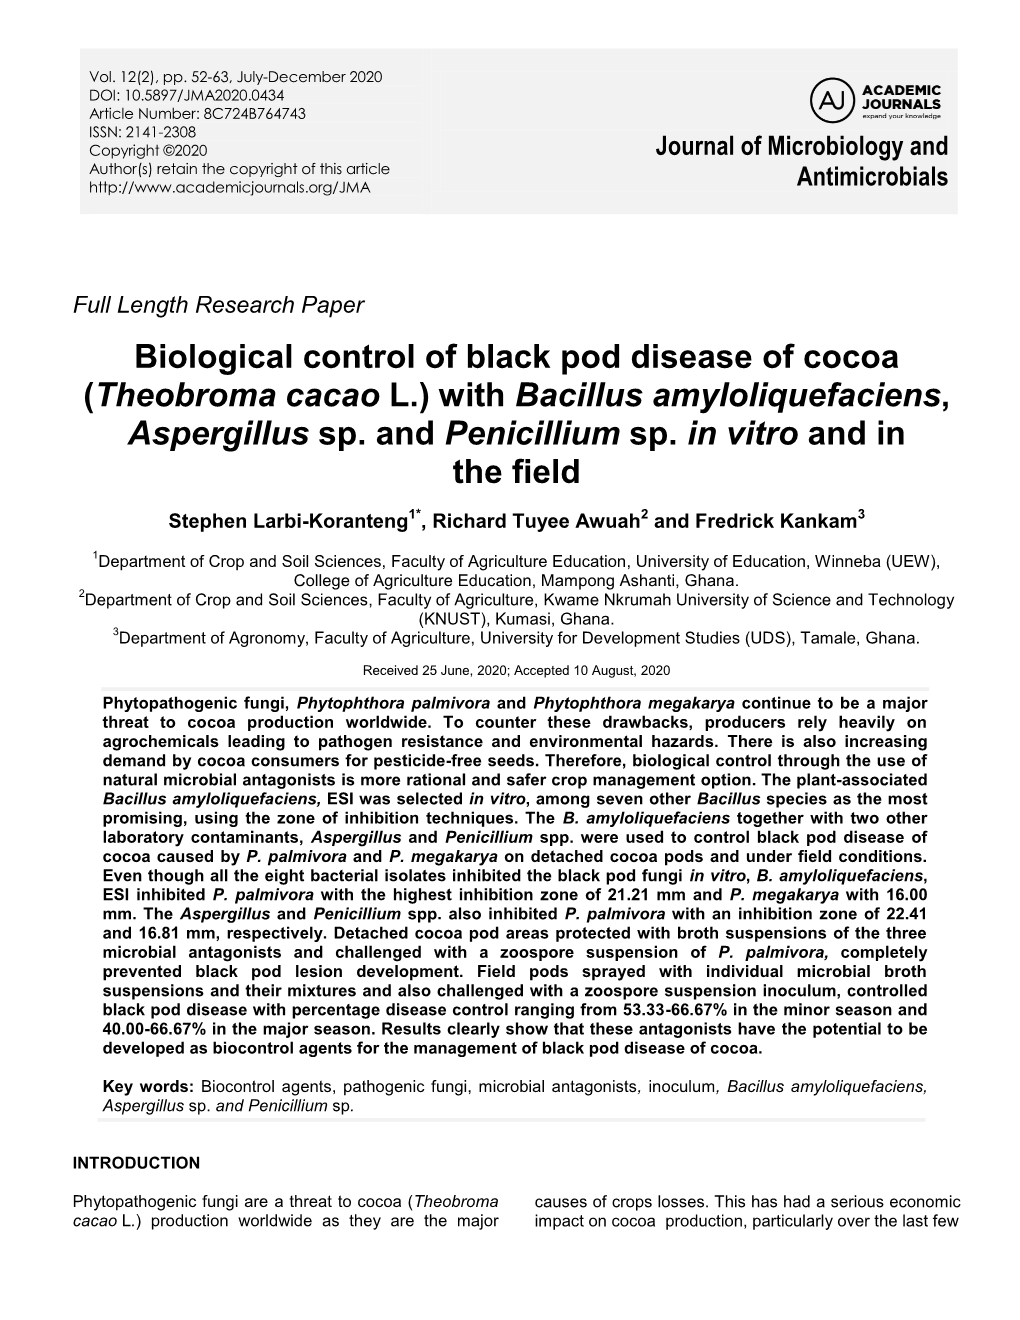 Biological Control of Black Pod Disease of Cocoa (Theobroma Cacao L.) with Bacillus Amyloliquefaciens, Aspergillus Sp